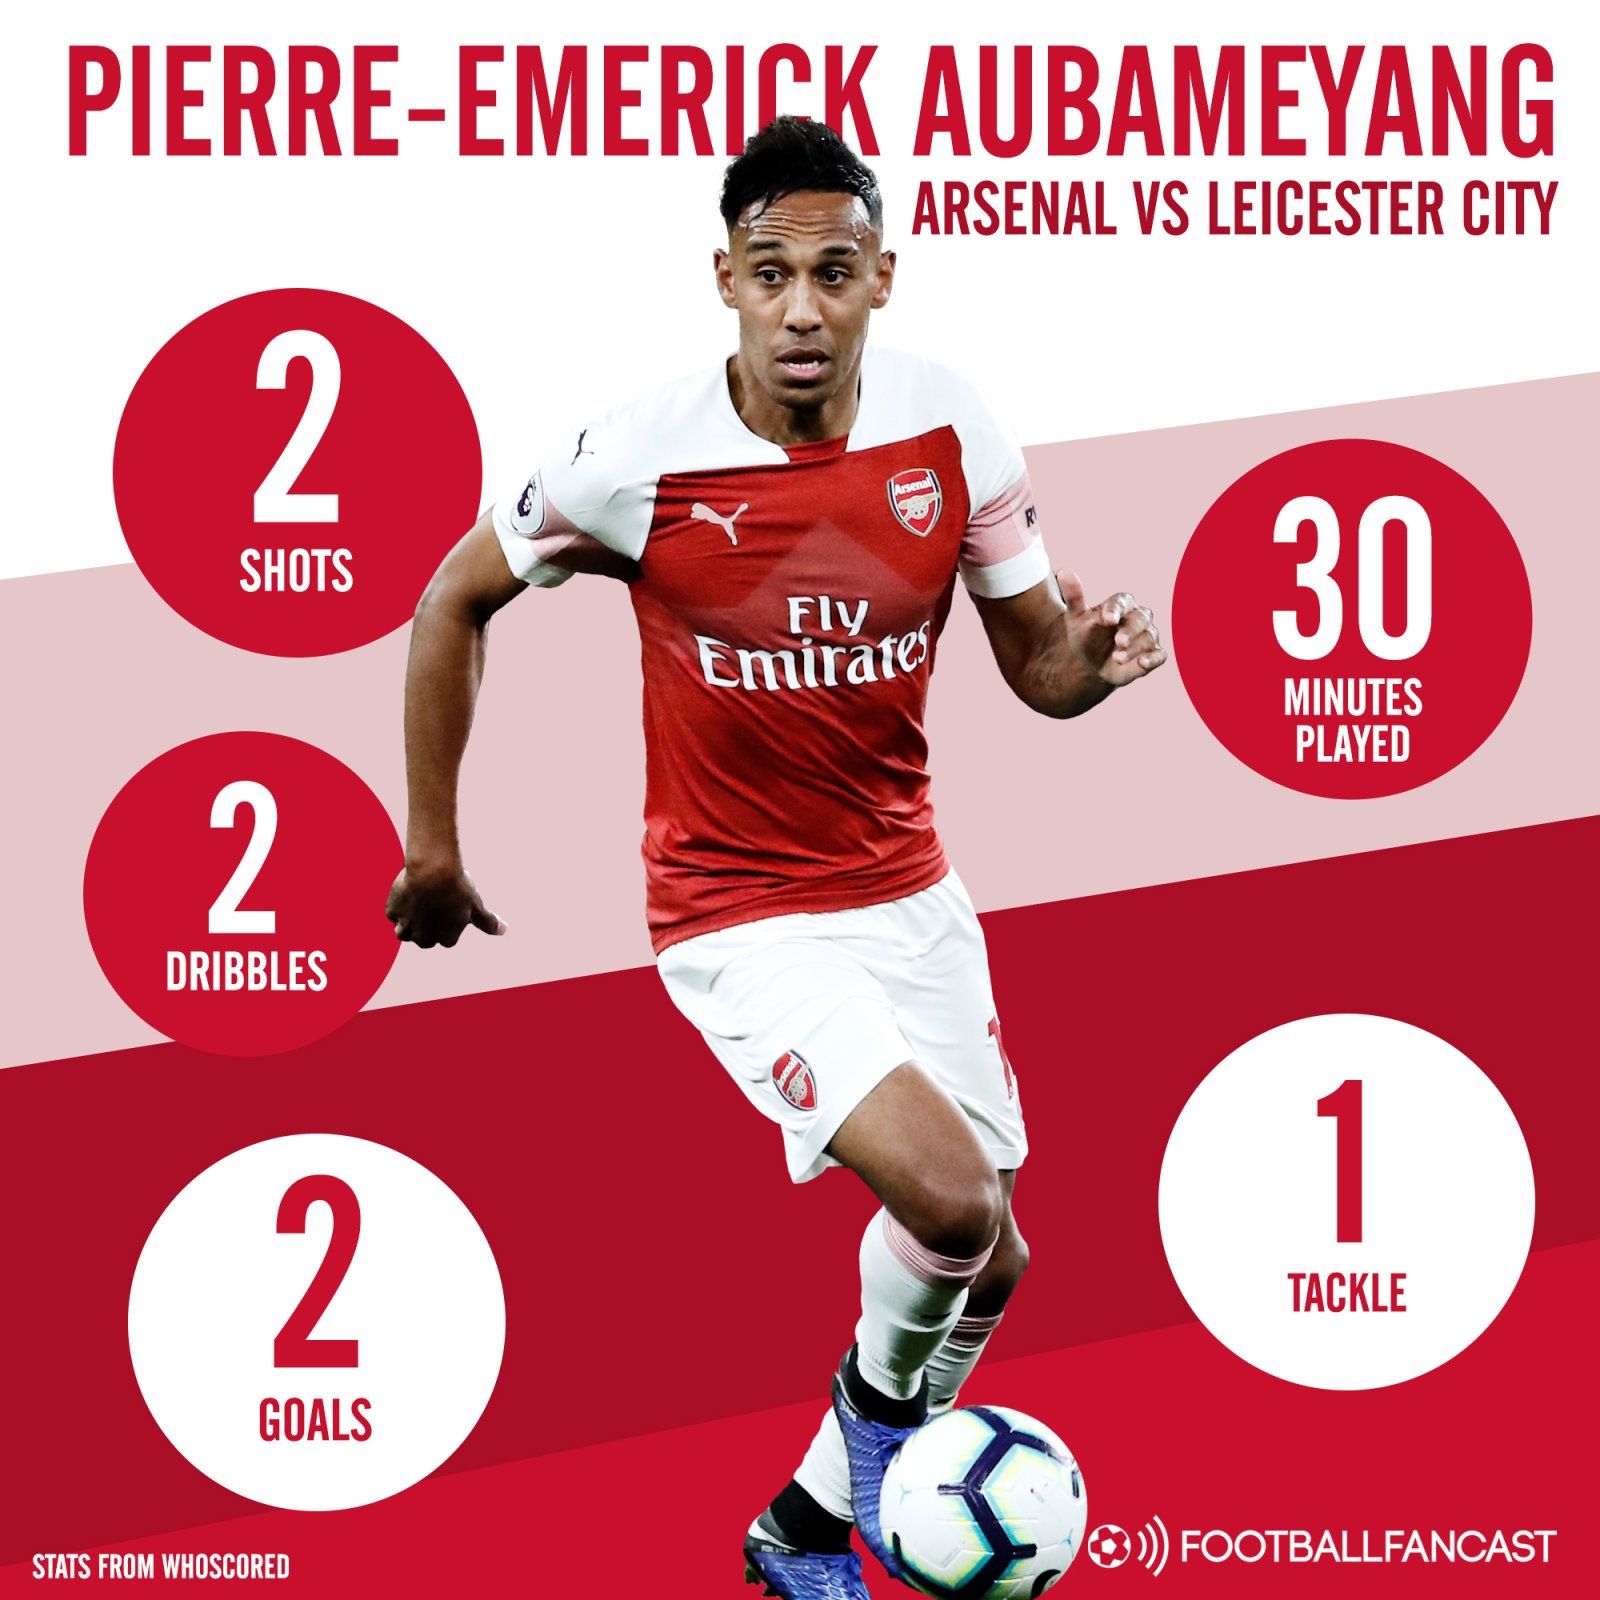 Pierre-Emerick Aubameyang's stats vs Leicester